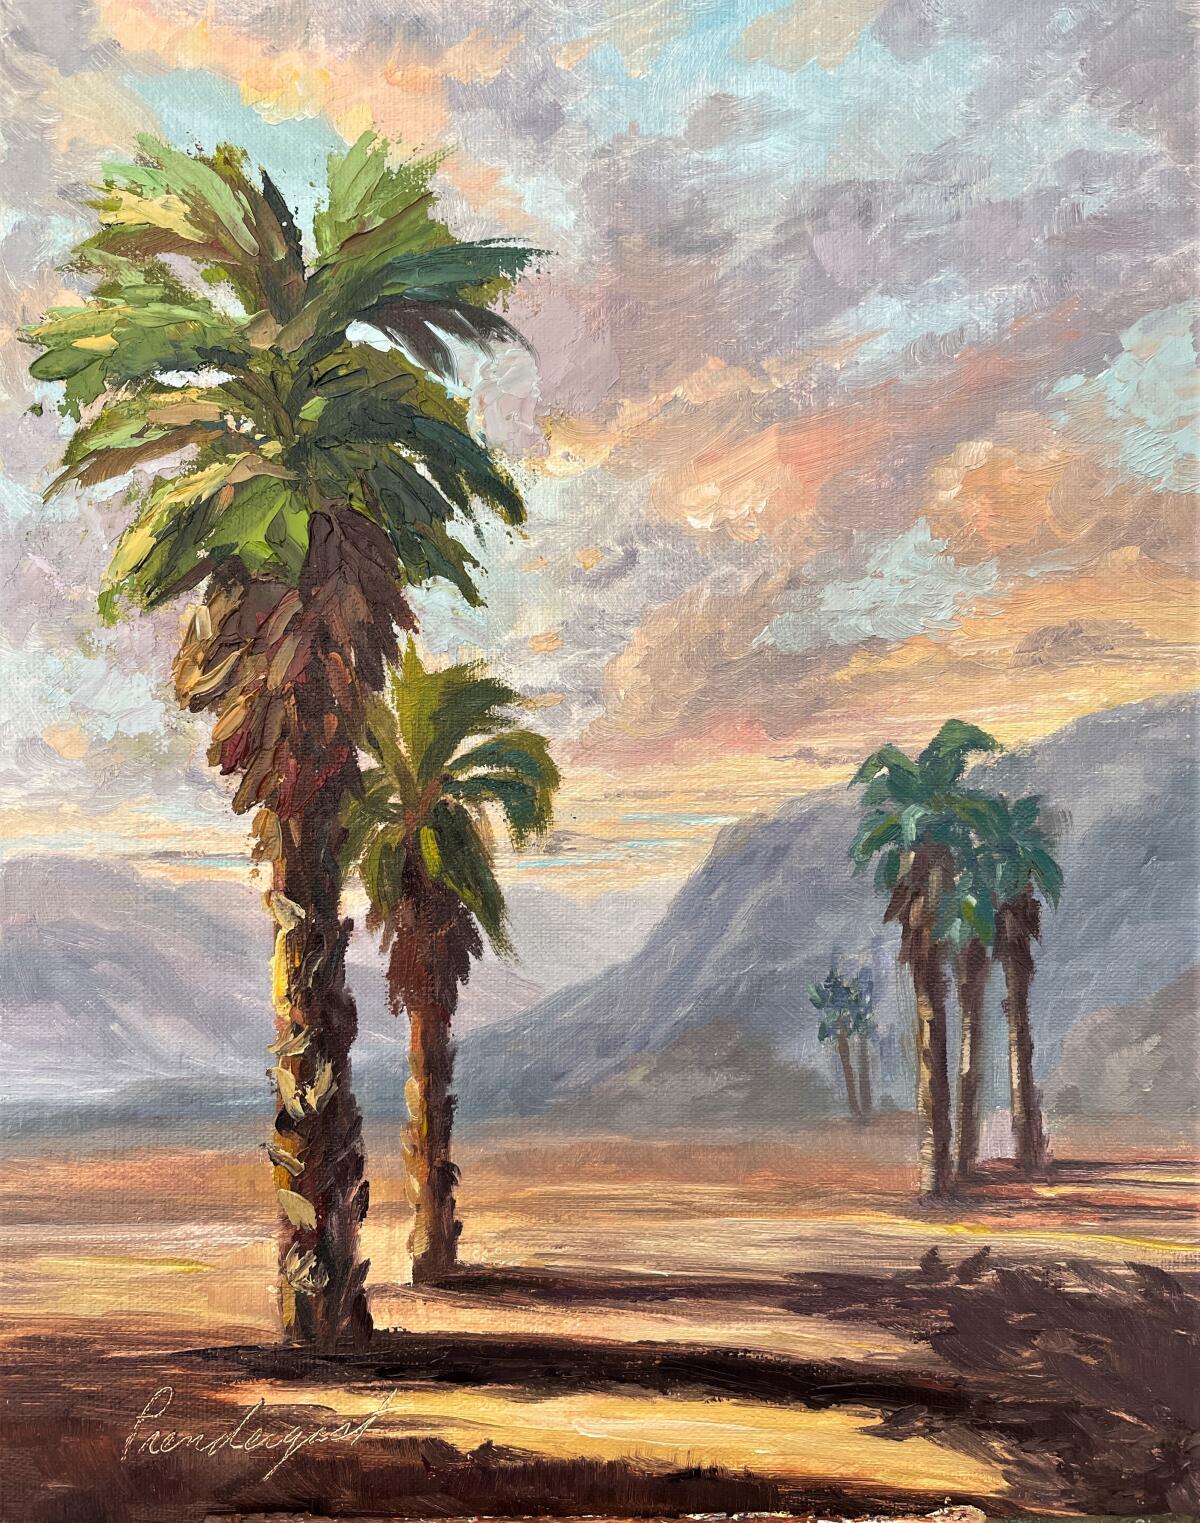 "Desert Palm," a plein air painting by Diane Prendergast created during a trip to Palm Desert.